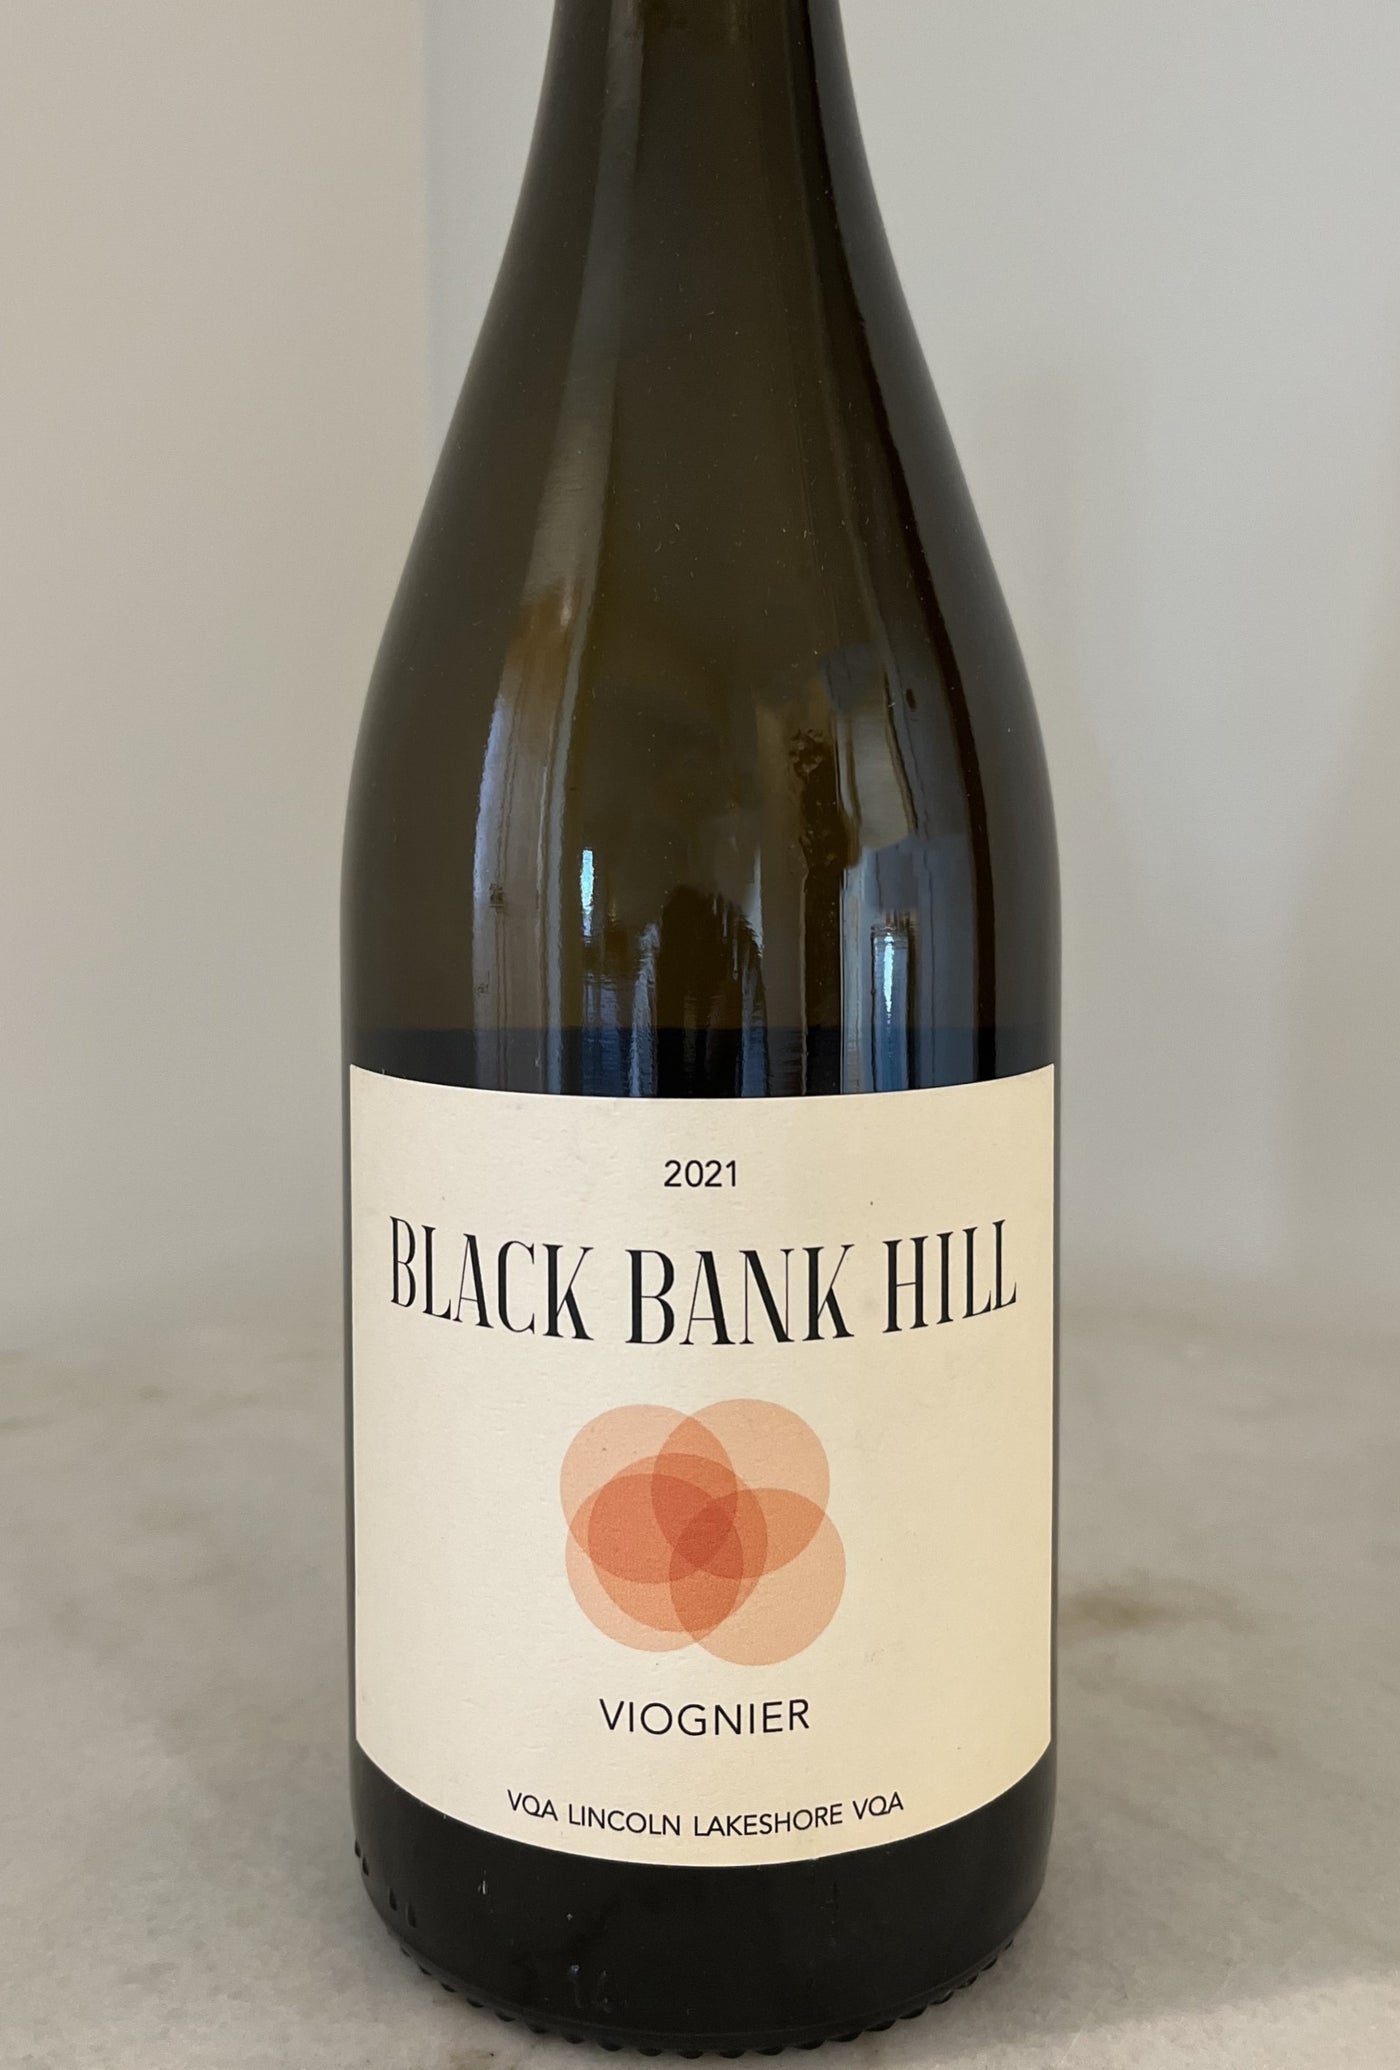 Black Bank Hill 2021 Estate Vineyard Viognier, Lincoln Lakeshore VQA